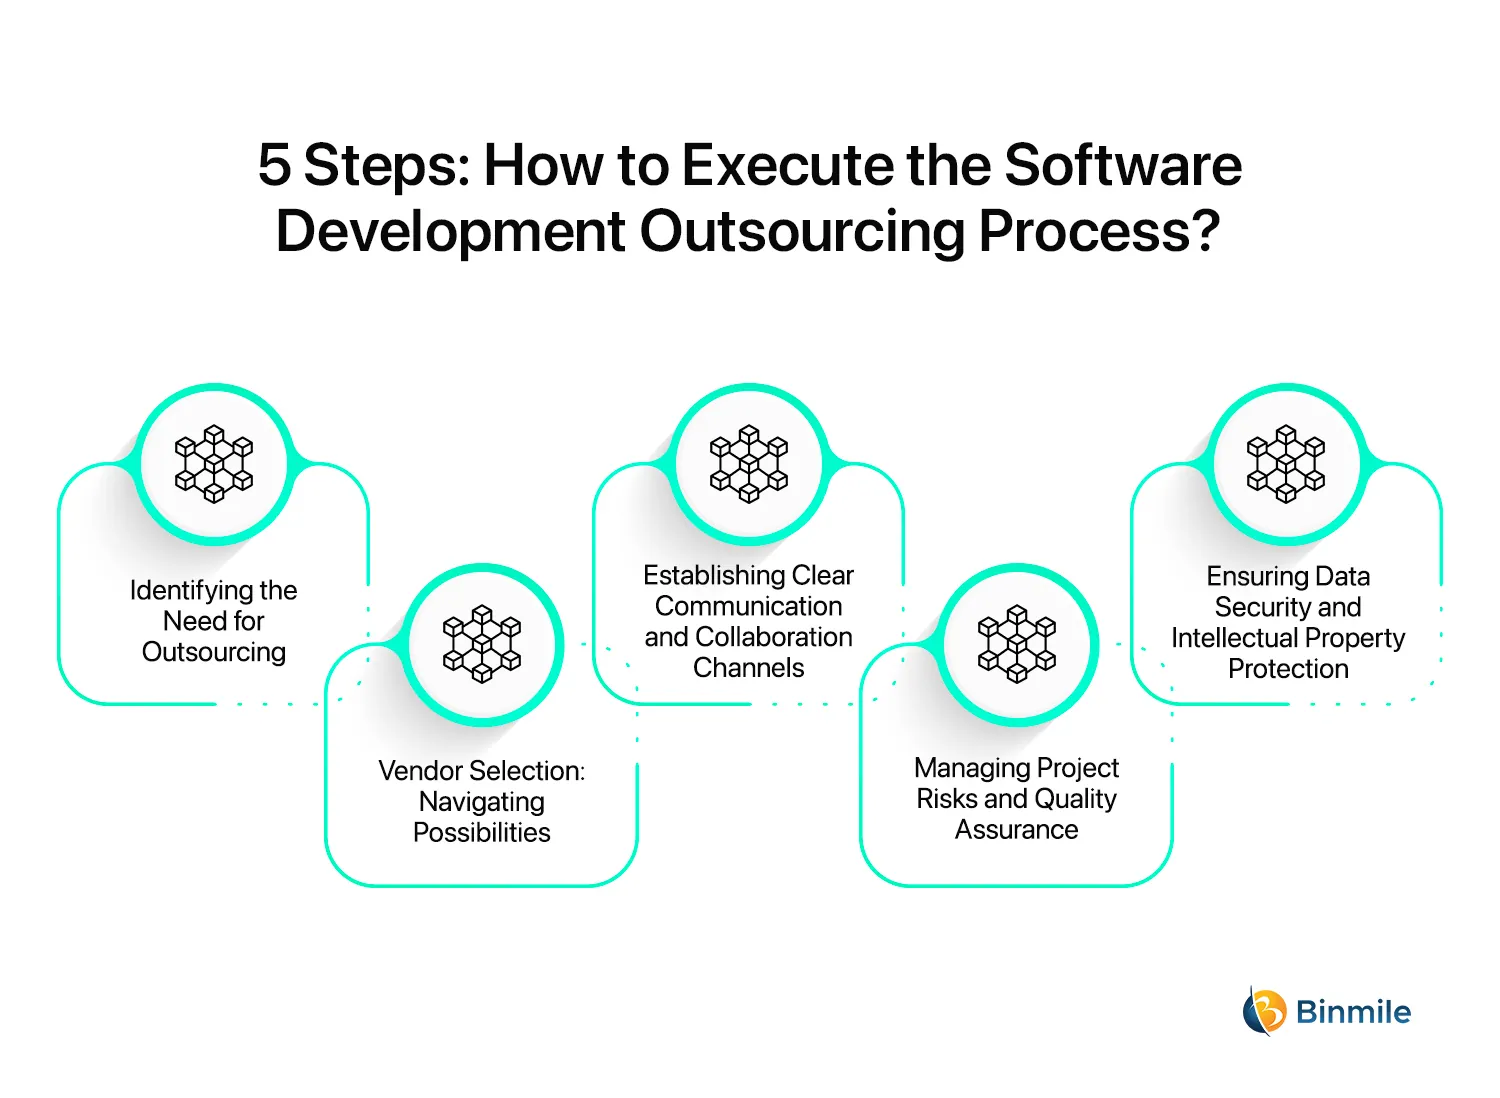 Software Development Outsourcing Process | 5 Simple Steps | Binmile